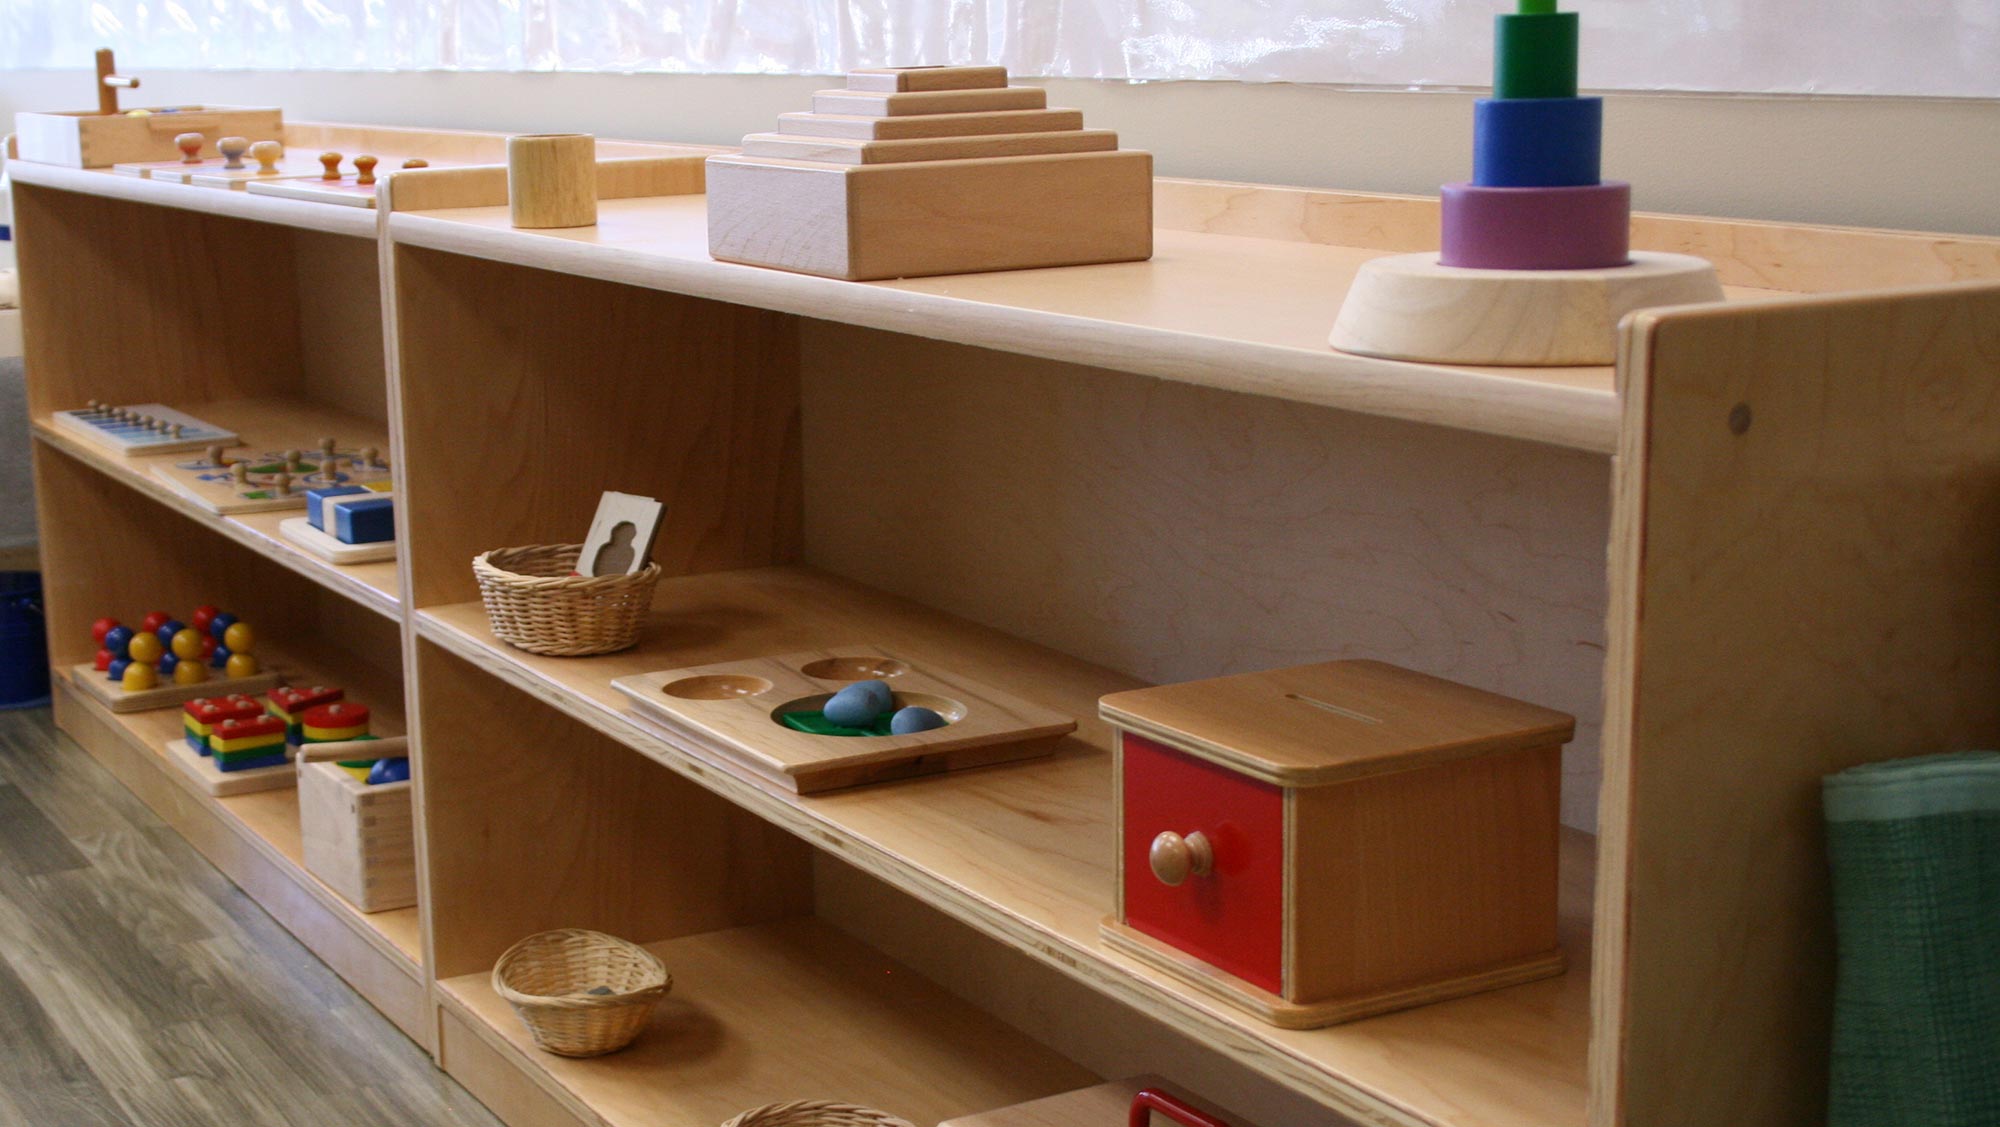 Toddler Program - LePort Montessori Schools